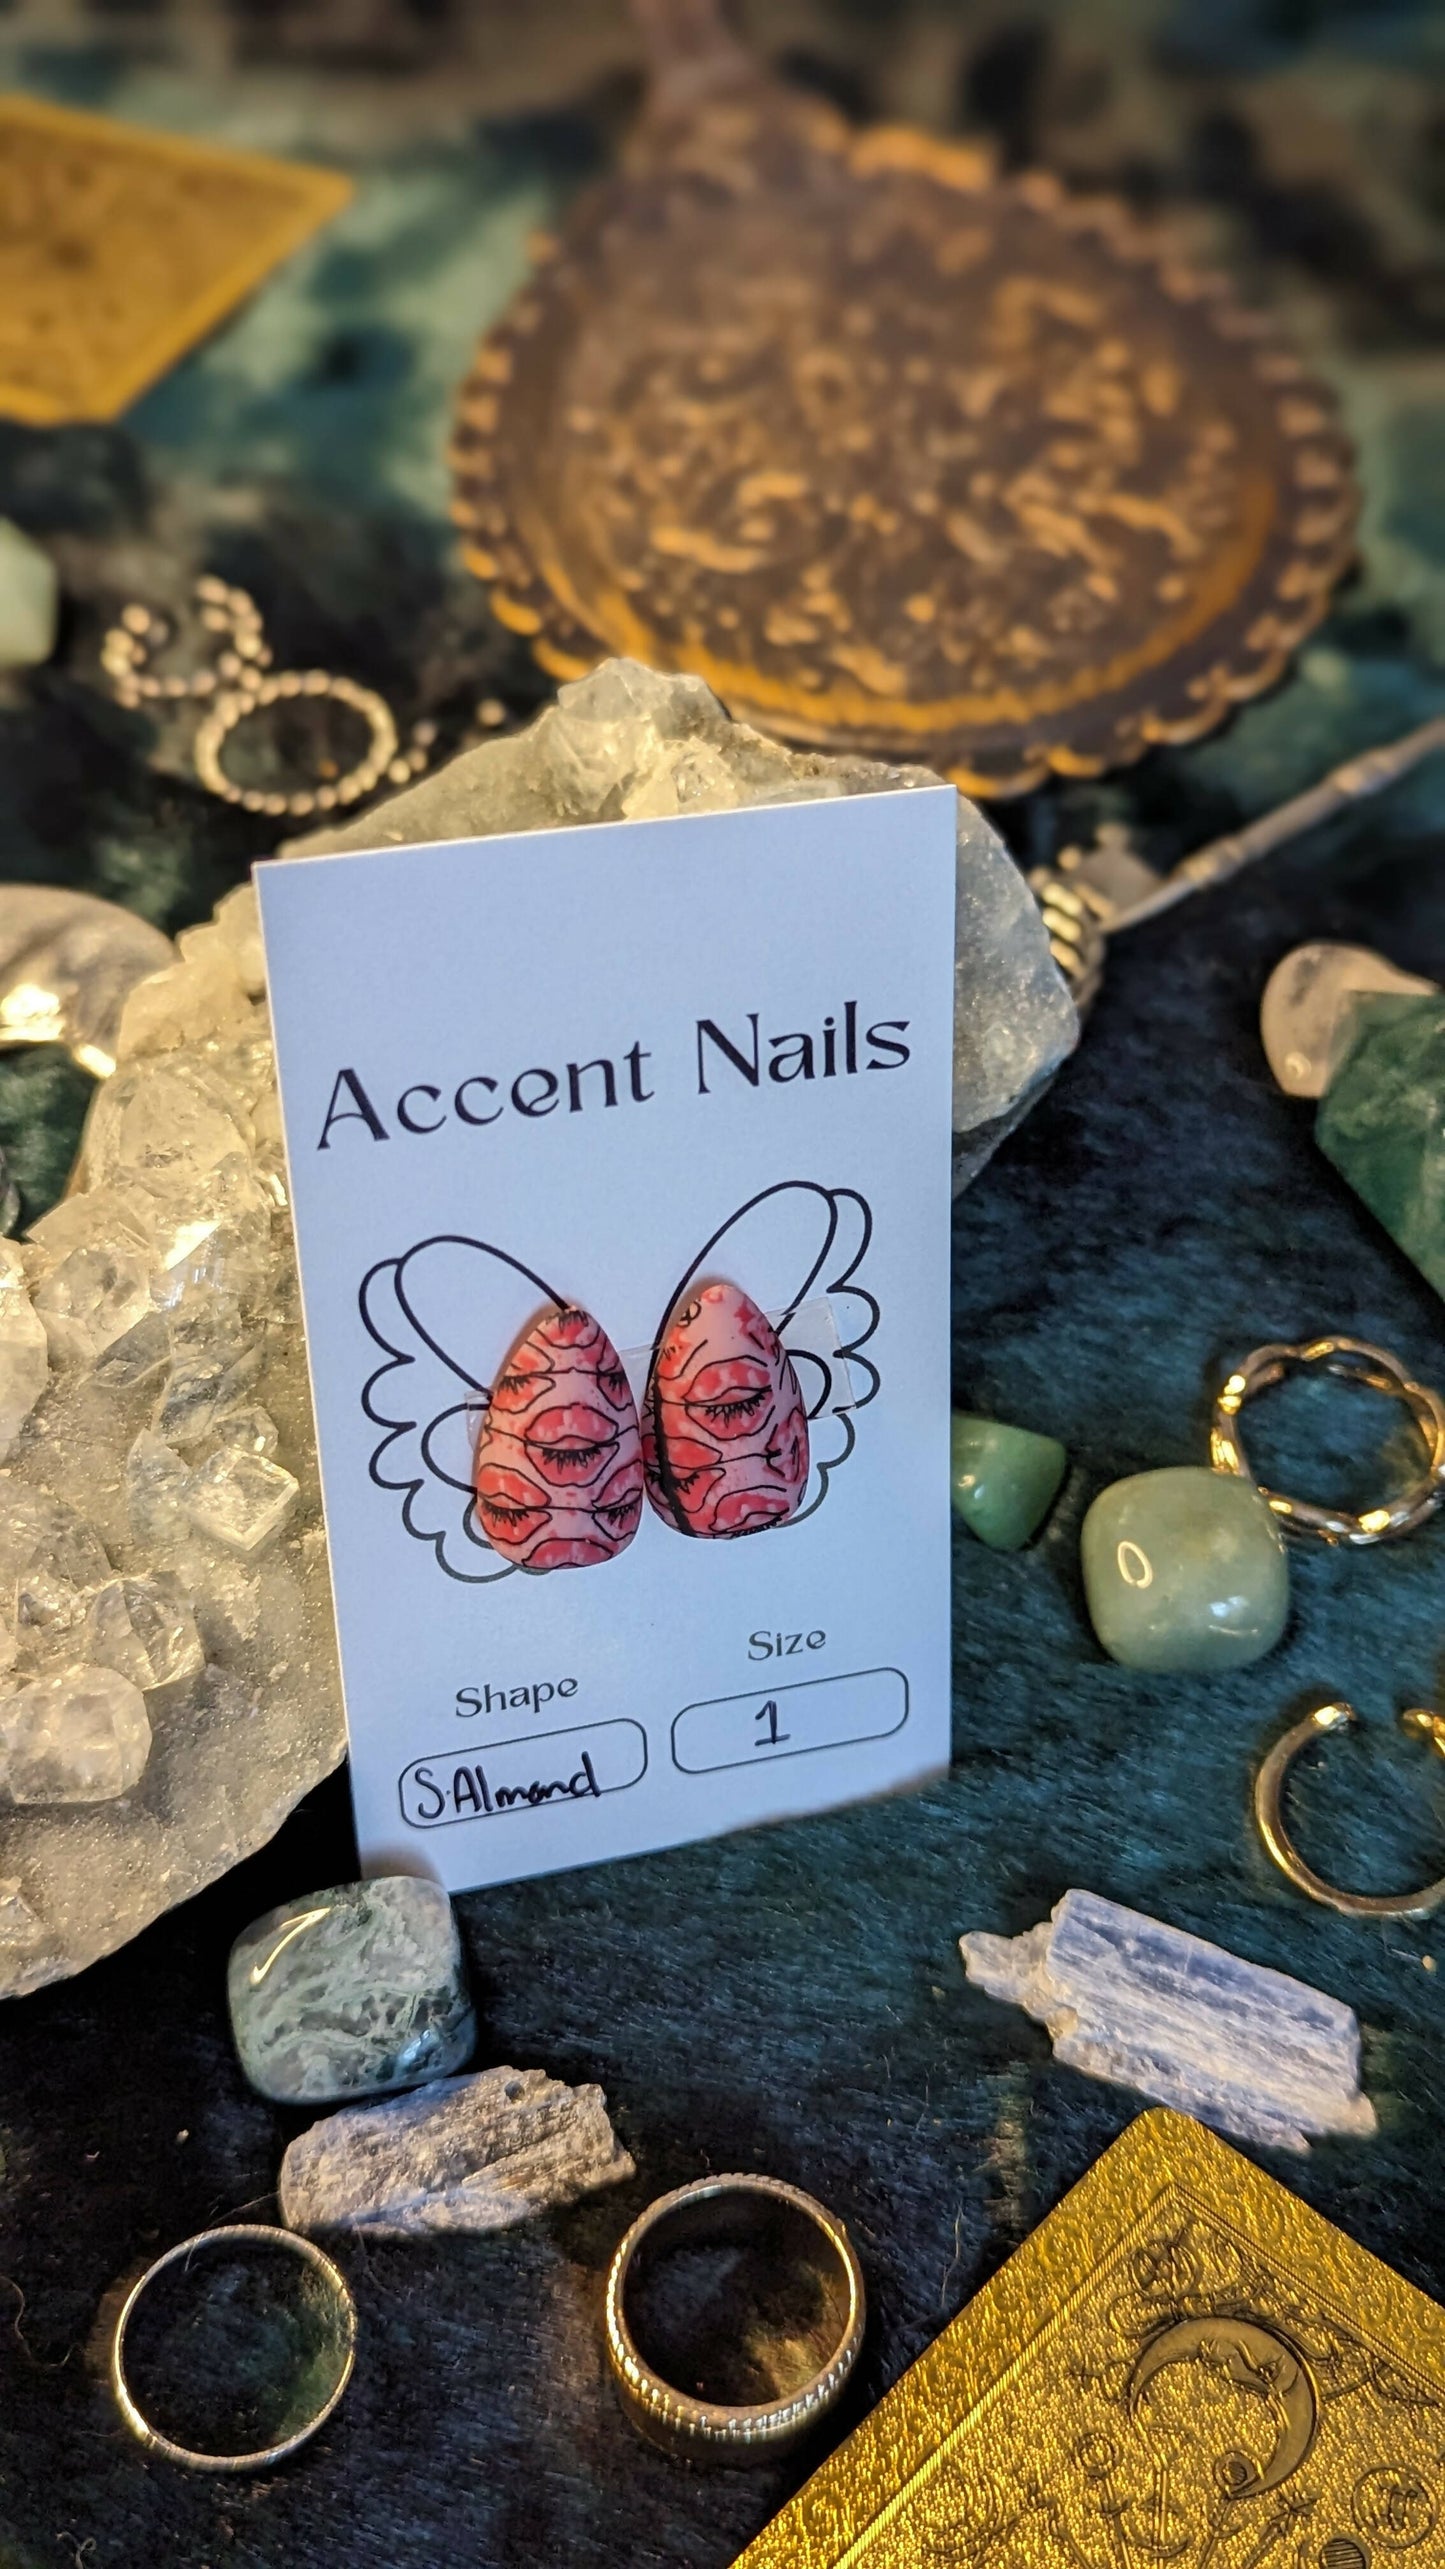 Accent Nails: Lipstick kiss - Size 1